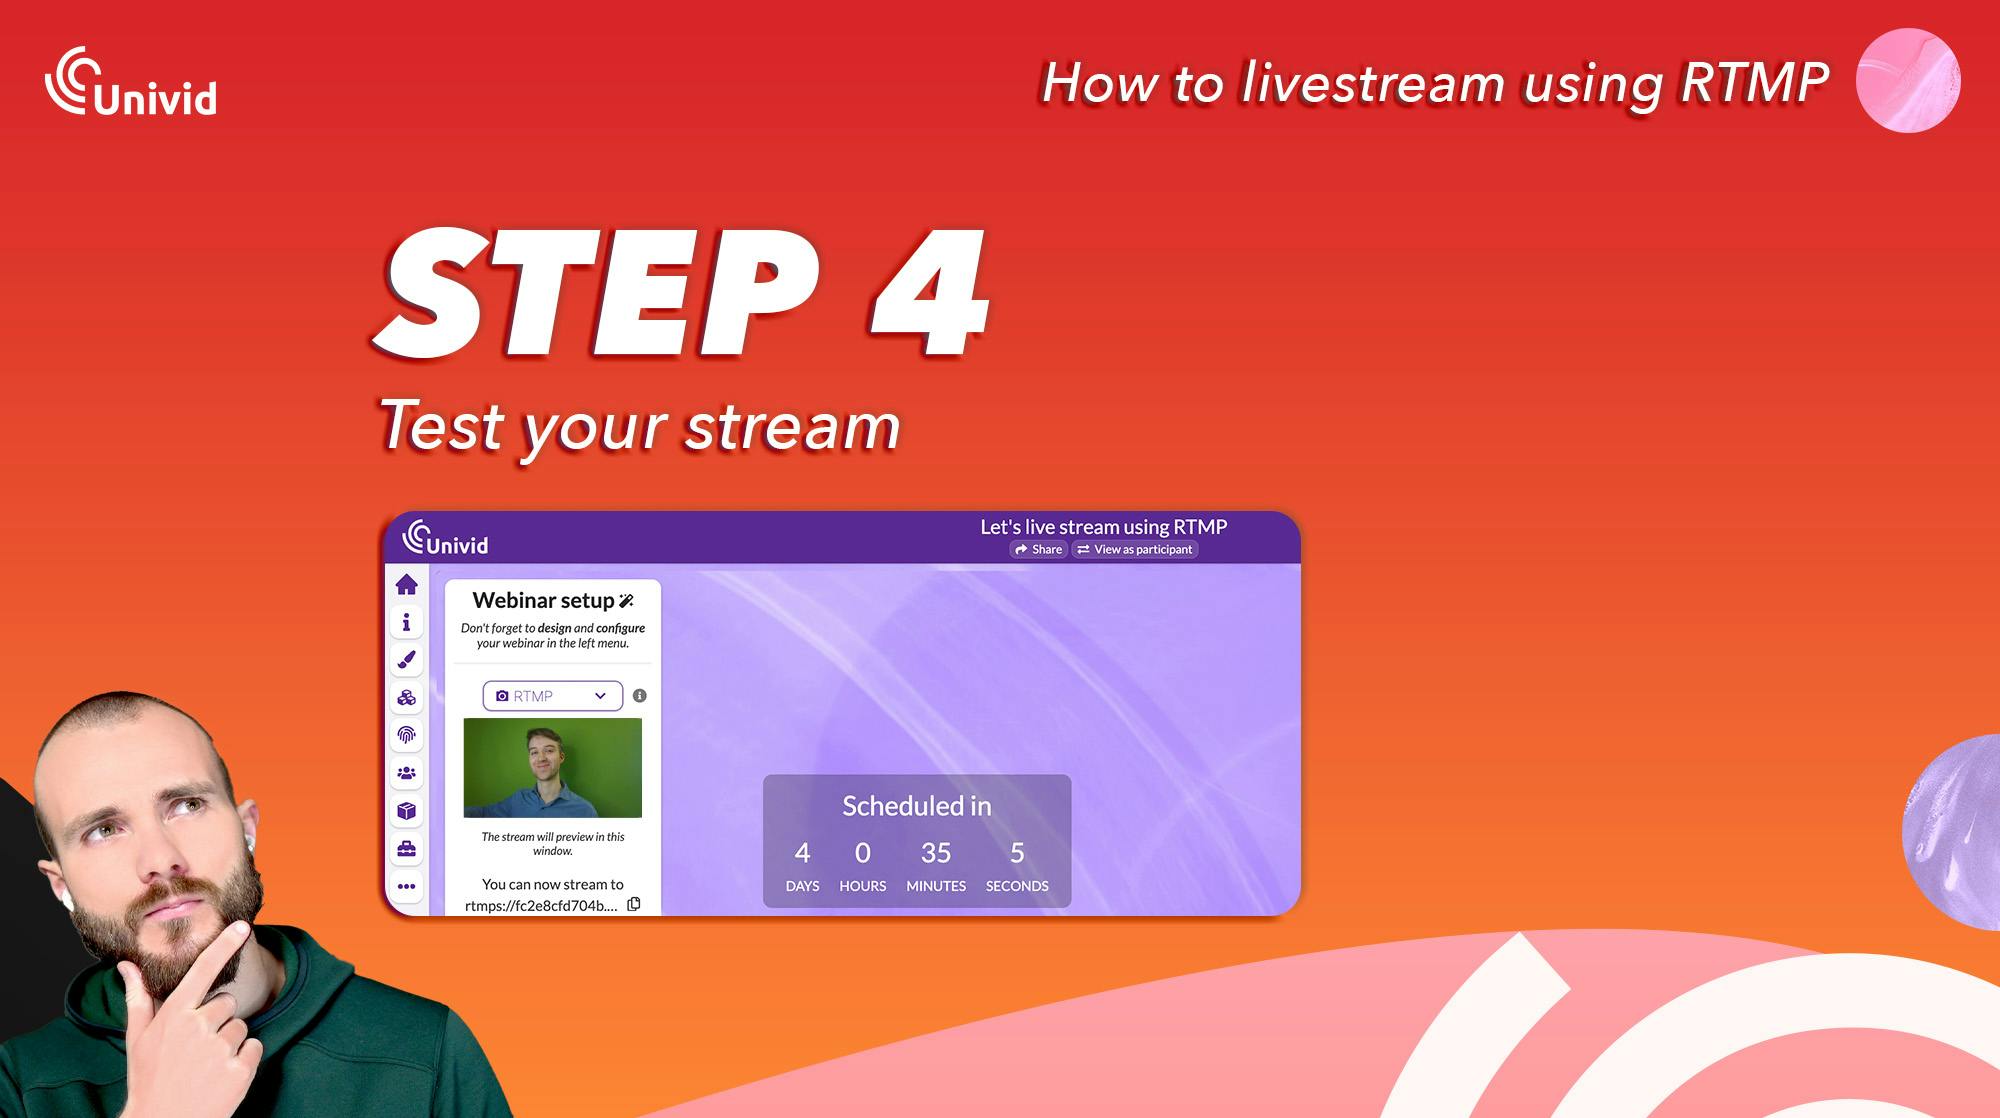 RTMP How to livestream guide - Step 4 - Test your livestream